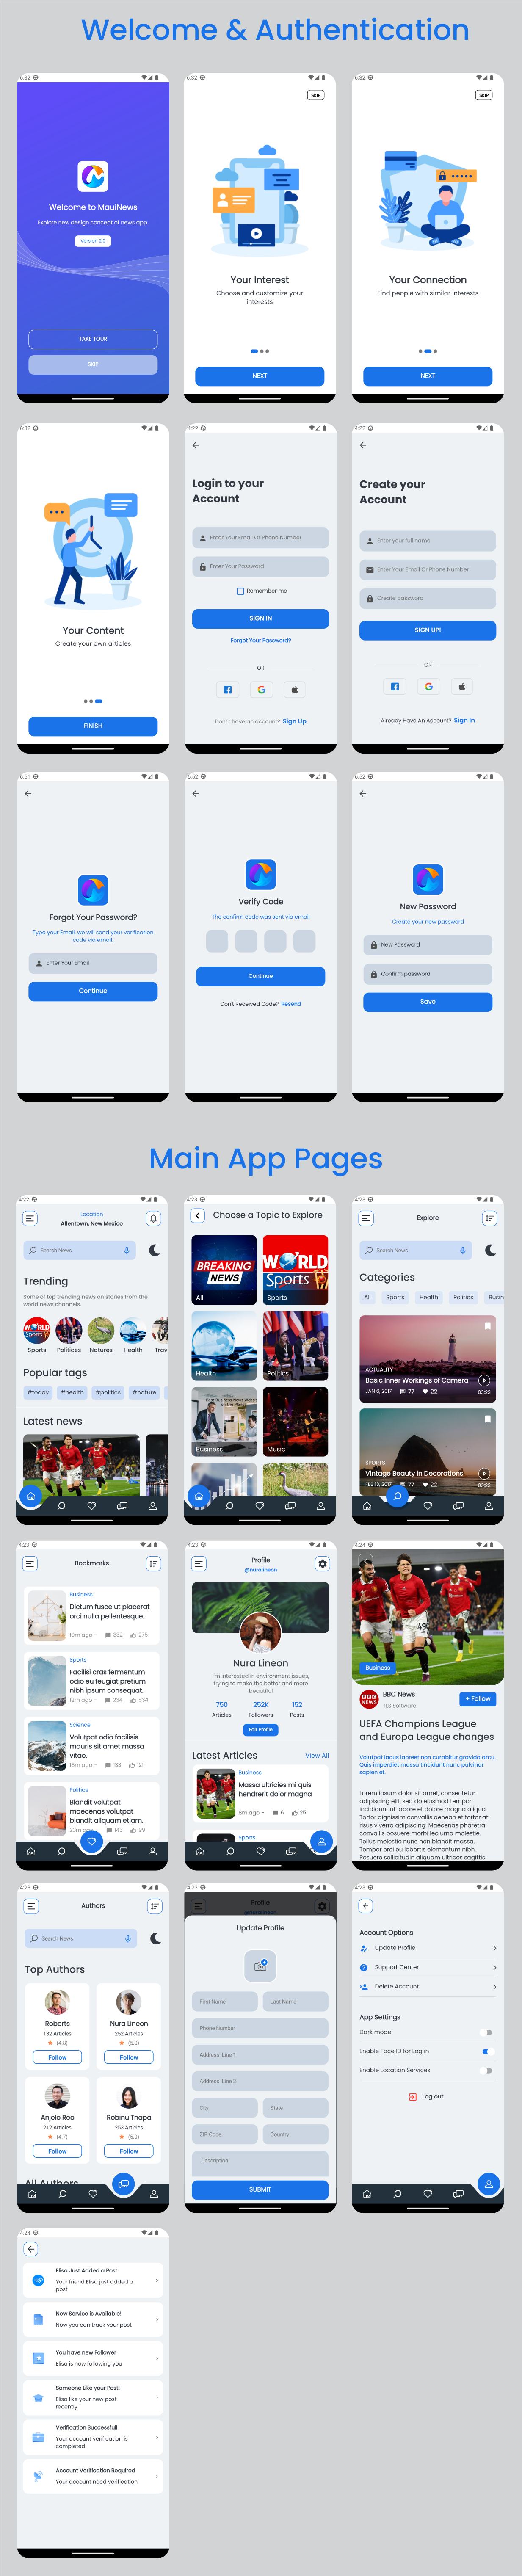 MauiNews - News and Magazine App Template for .NET MAUI - 2